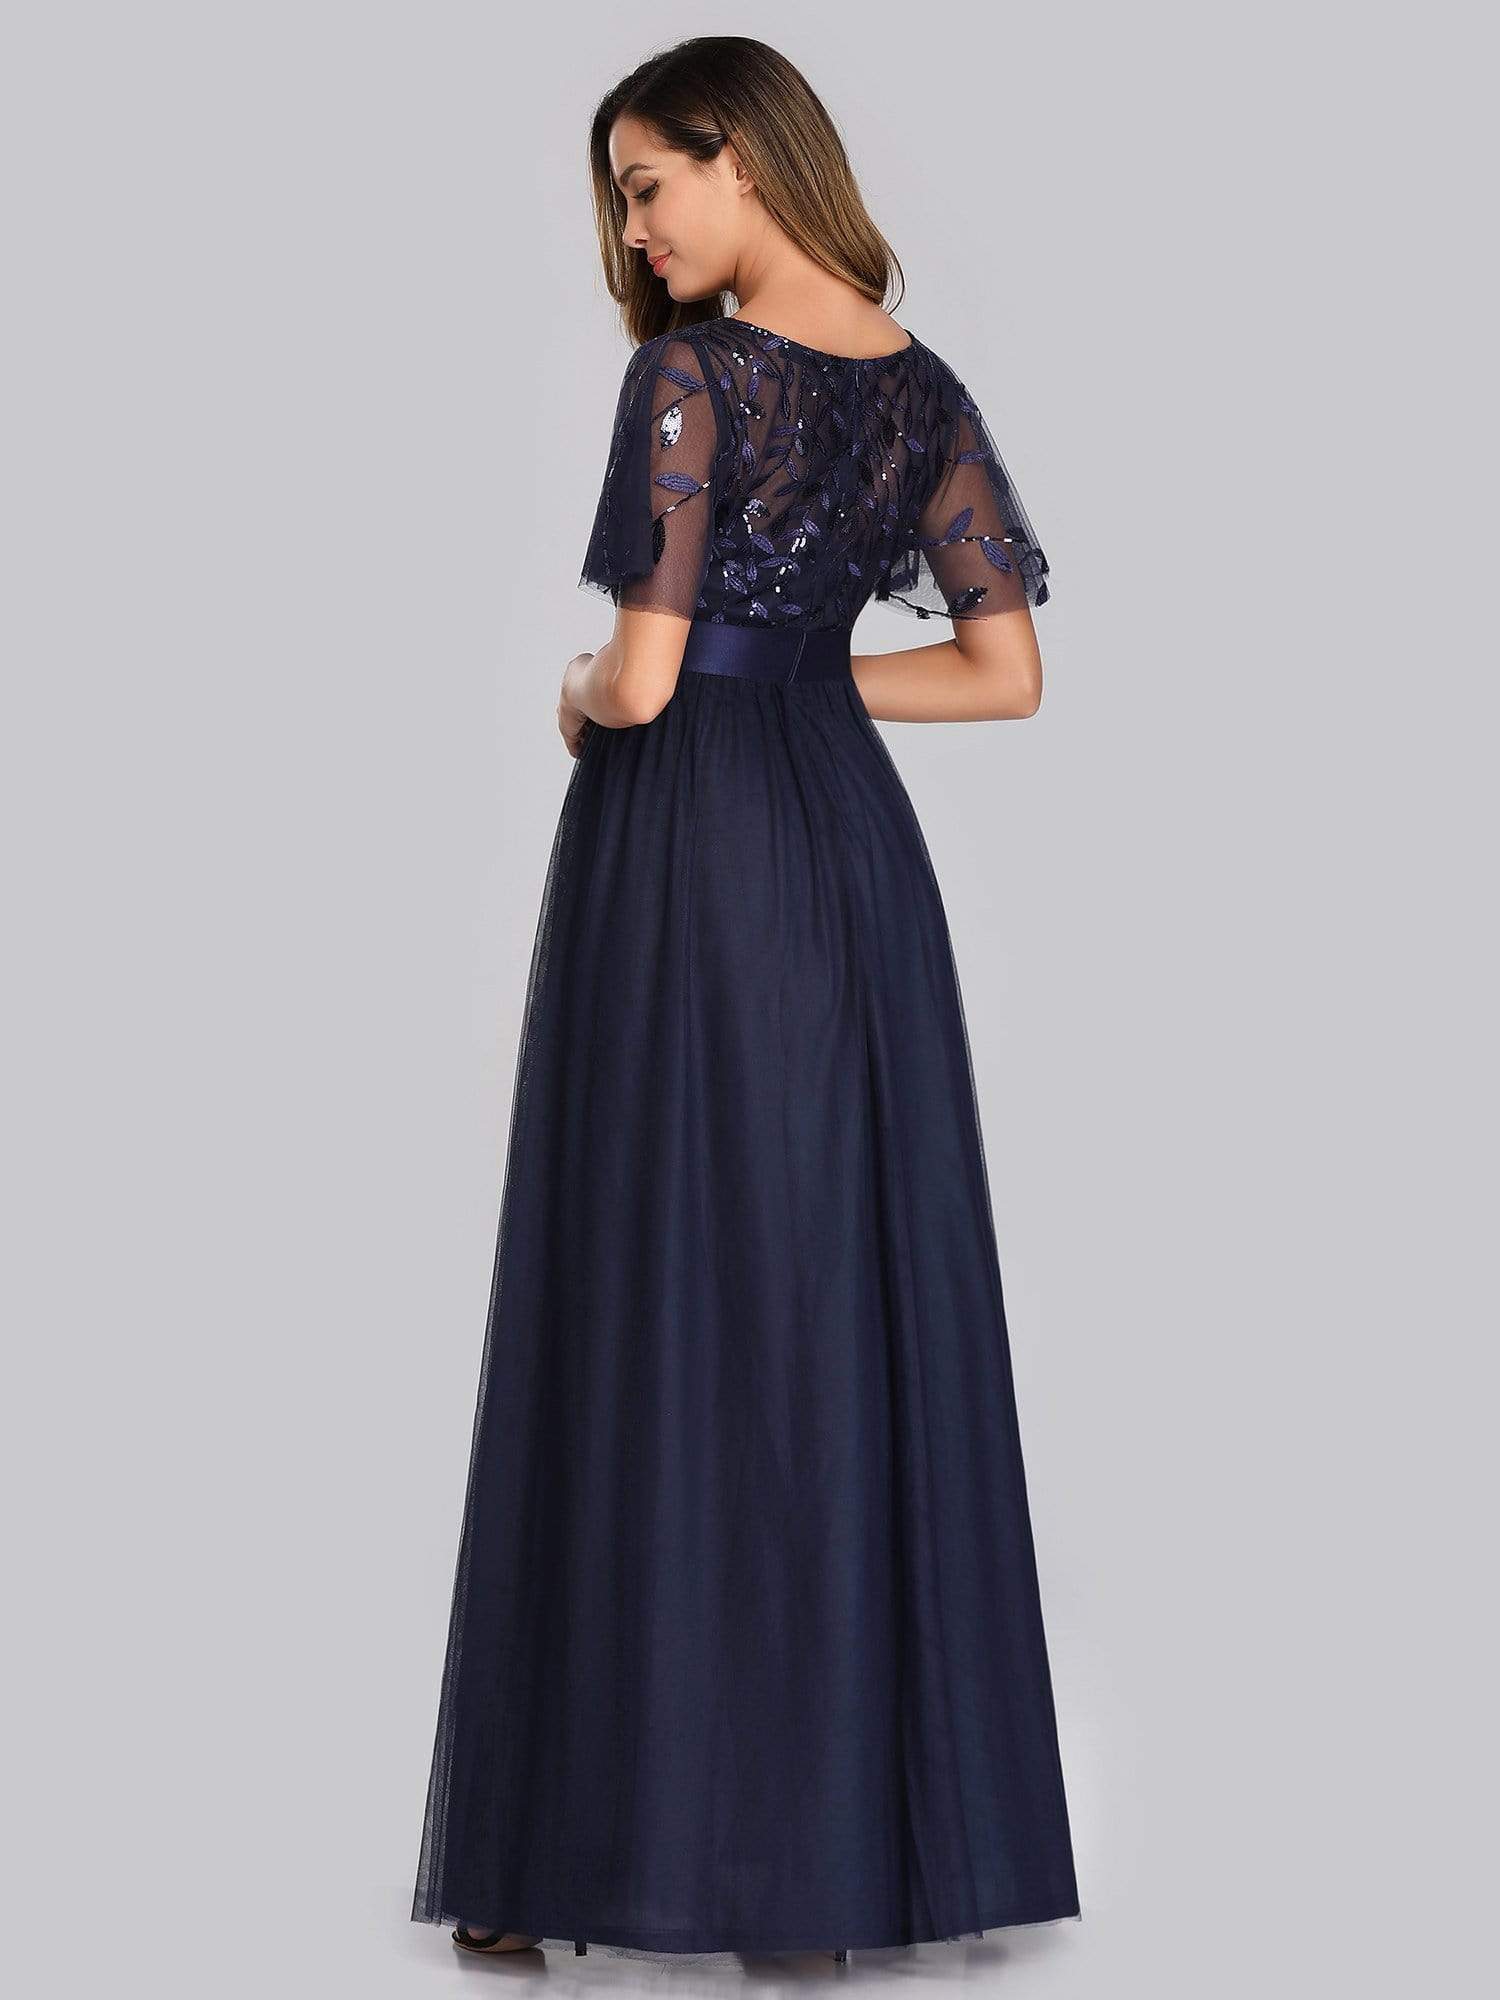 COLOR=Navy Blue | Women'S A-Line Short Sleeve Embroidery Floor Length Evening Dresses-Navy Blue 4